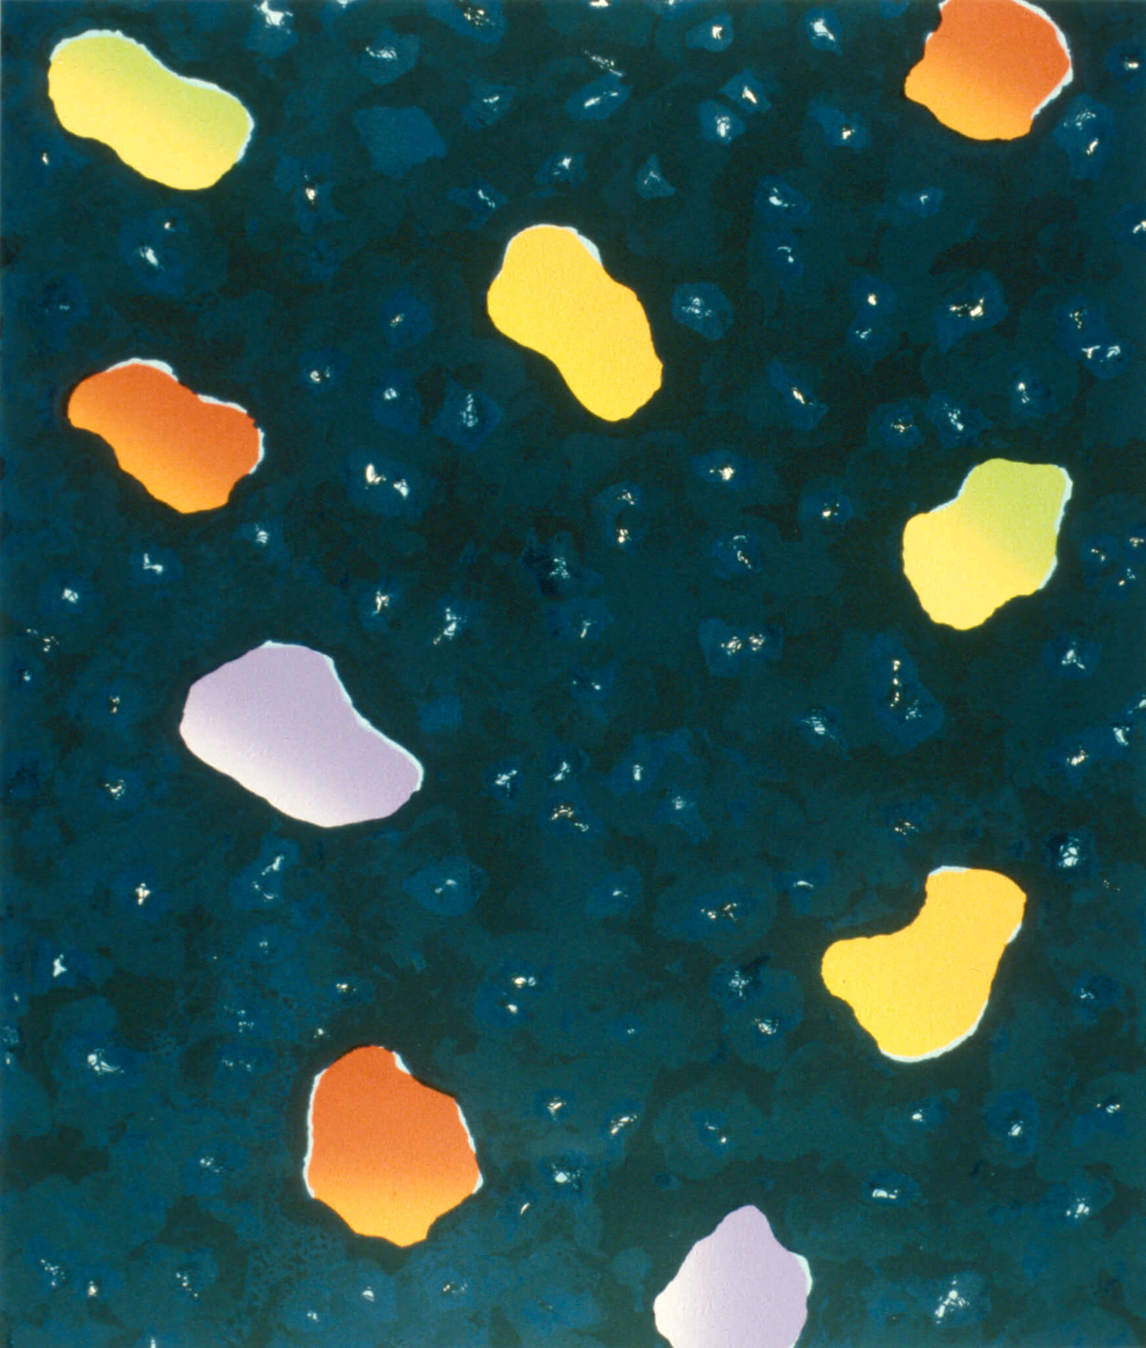 Art Canada Institute, Gershon Iskowitz, Little Orange Painting II, 1974